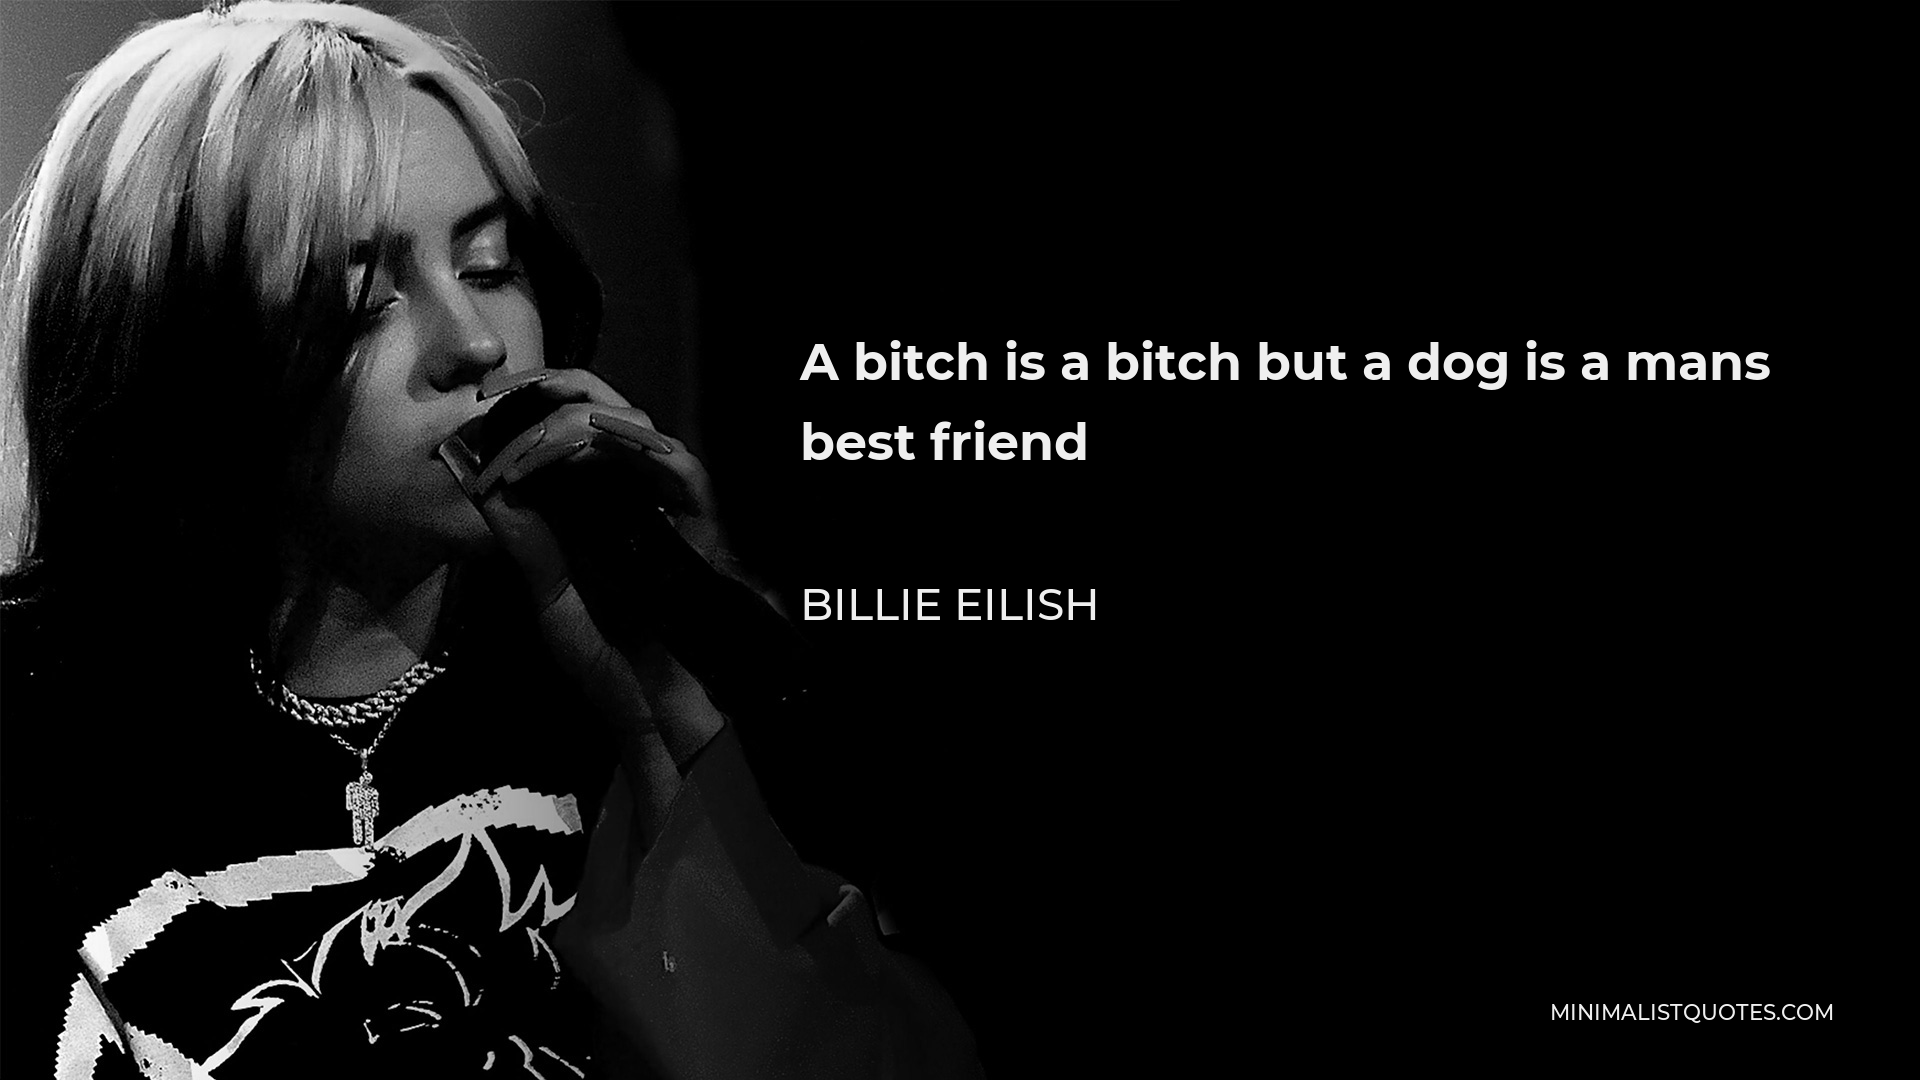 Billie Eilish Quote - A bitch is a bitch but a dog is a mans best friend